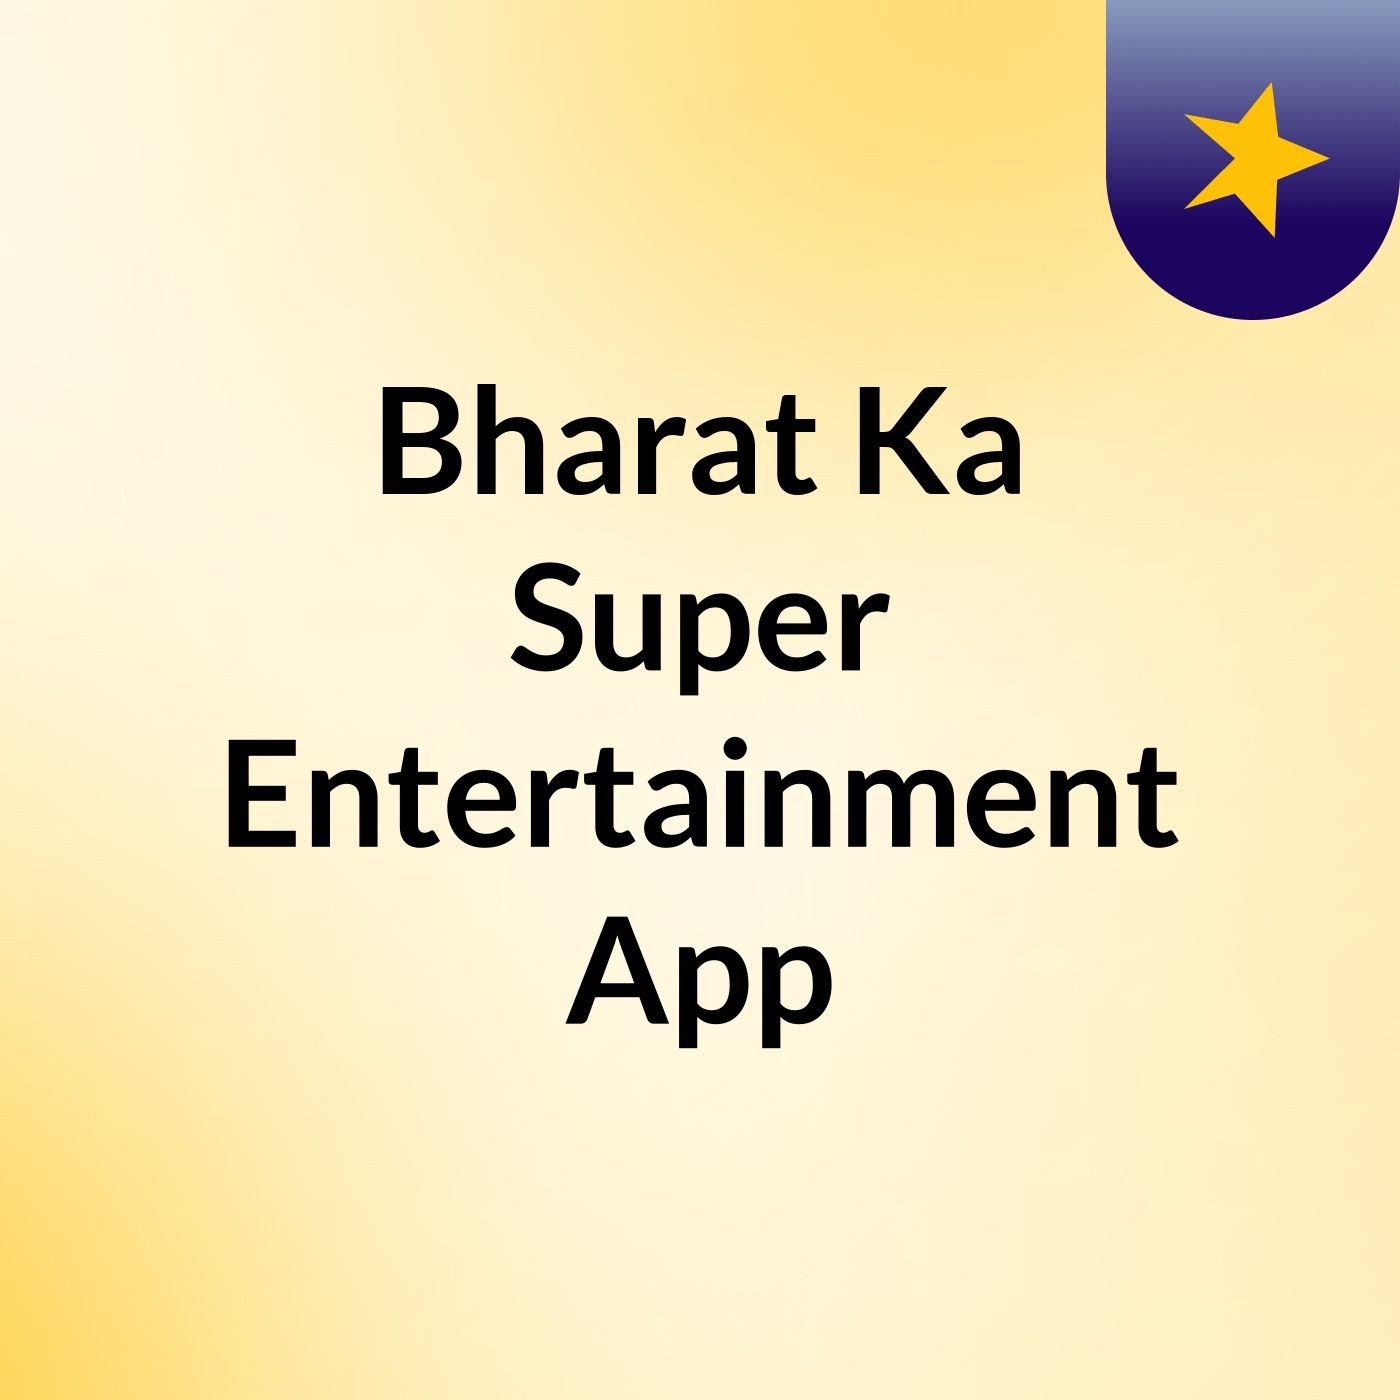 Bharat Ka Super Entertainment App